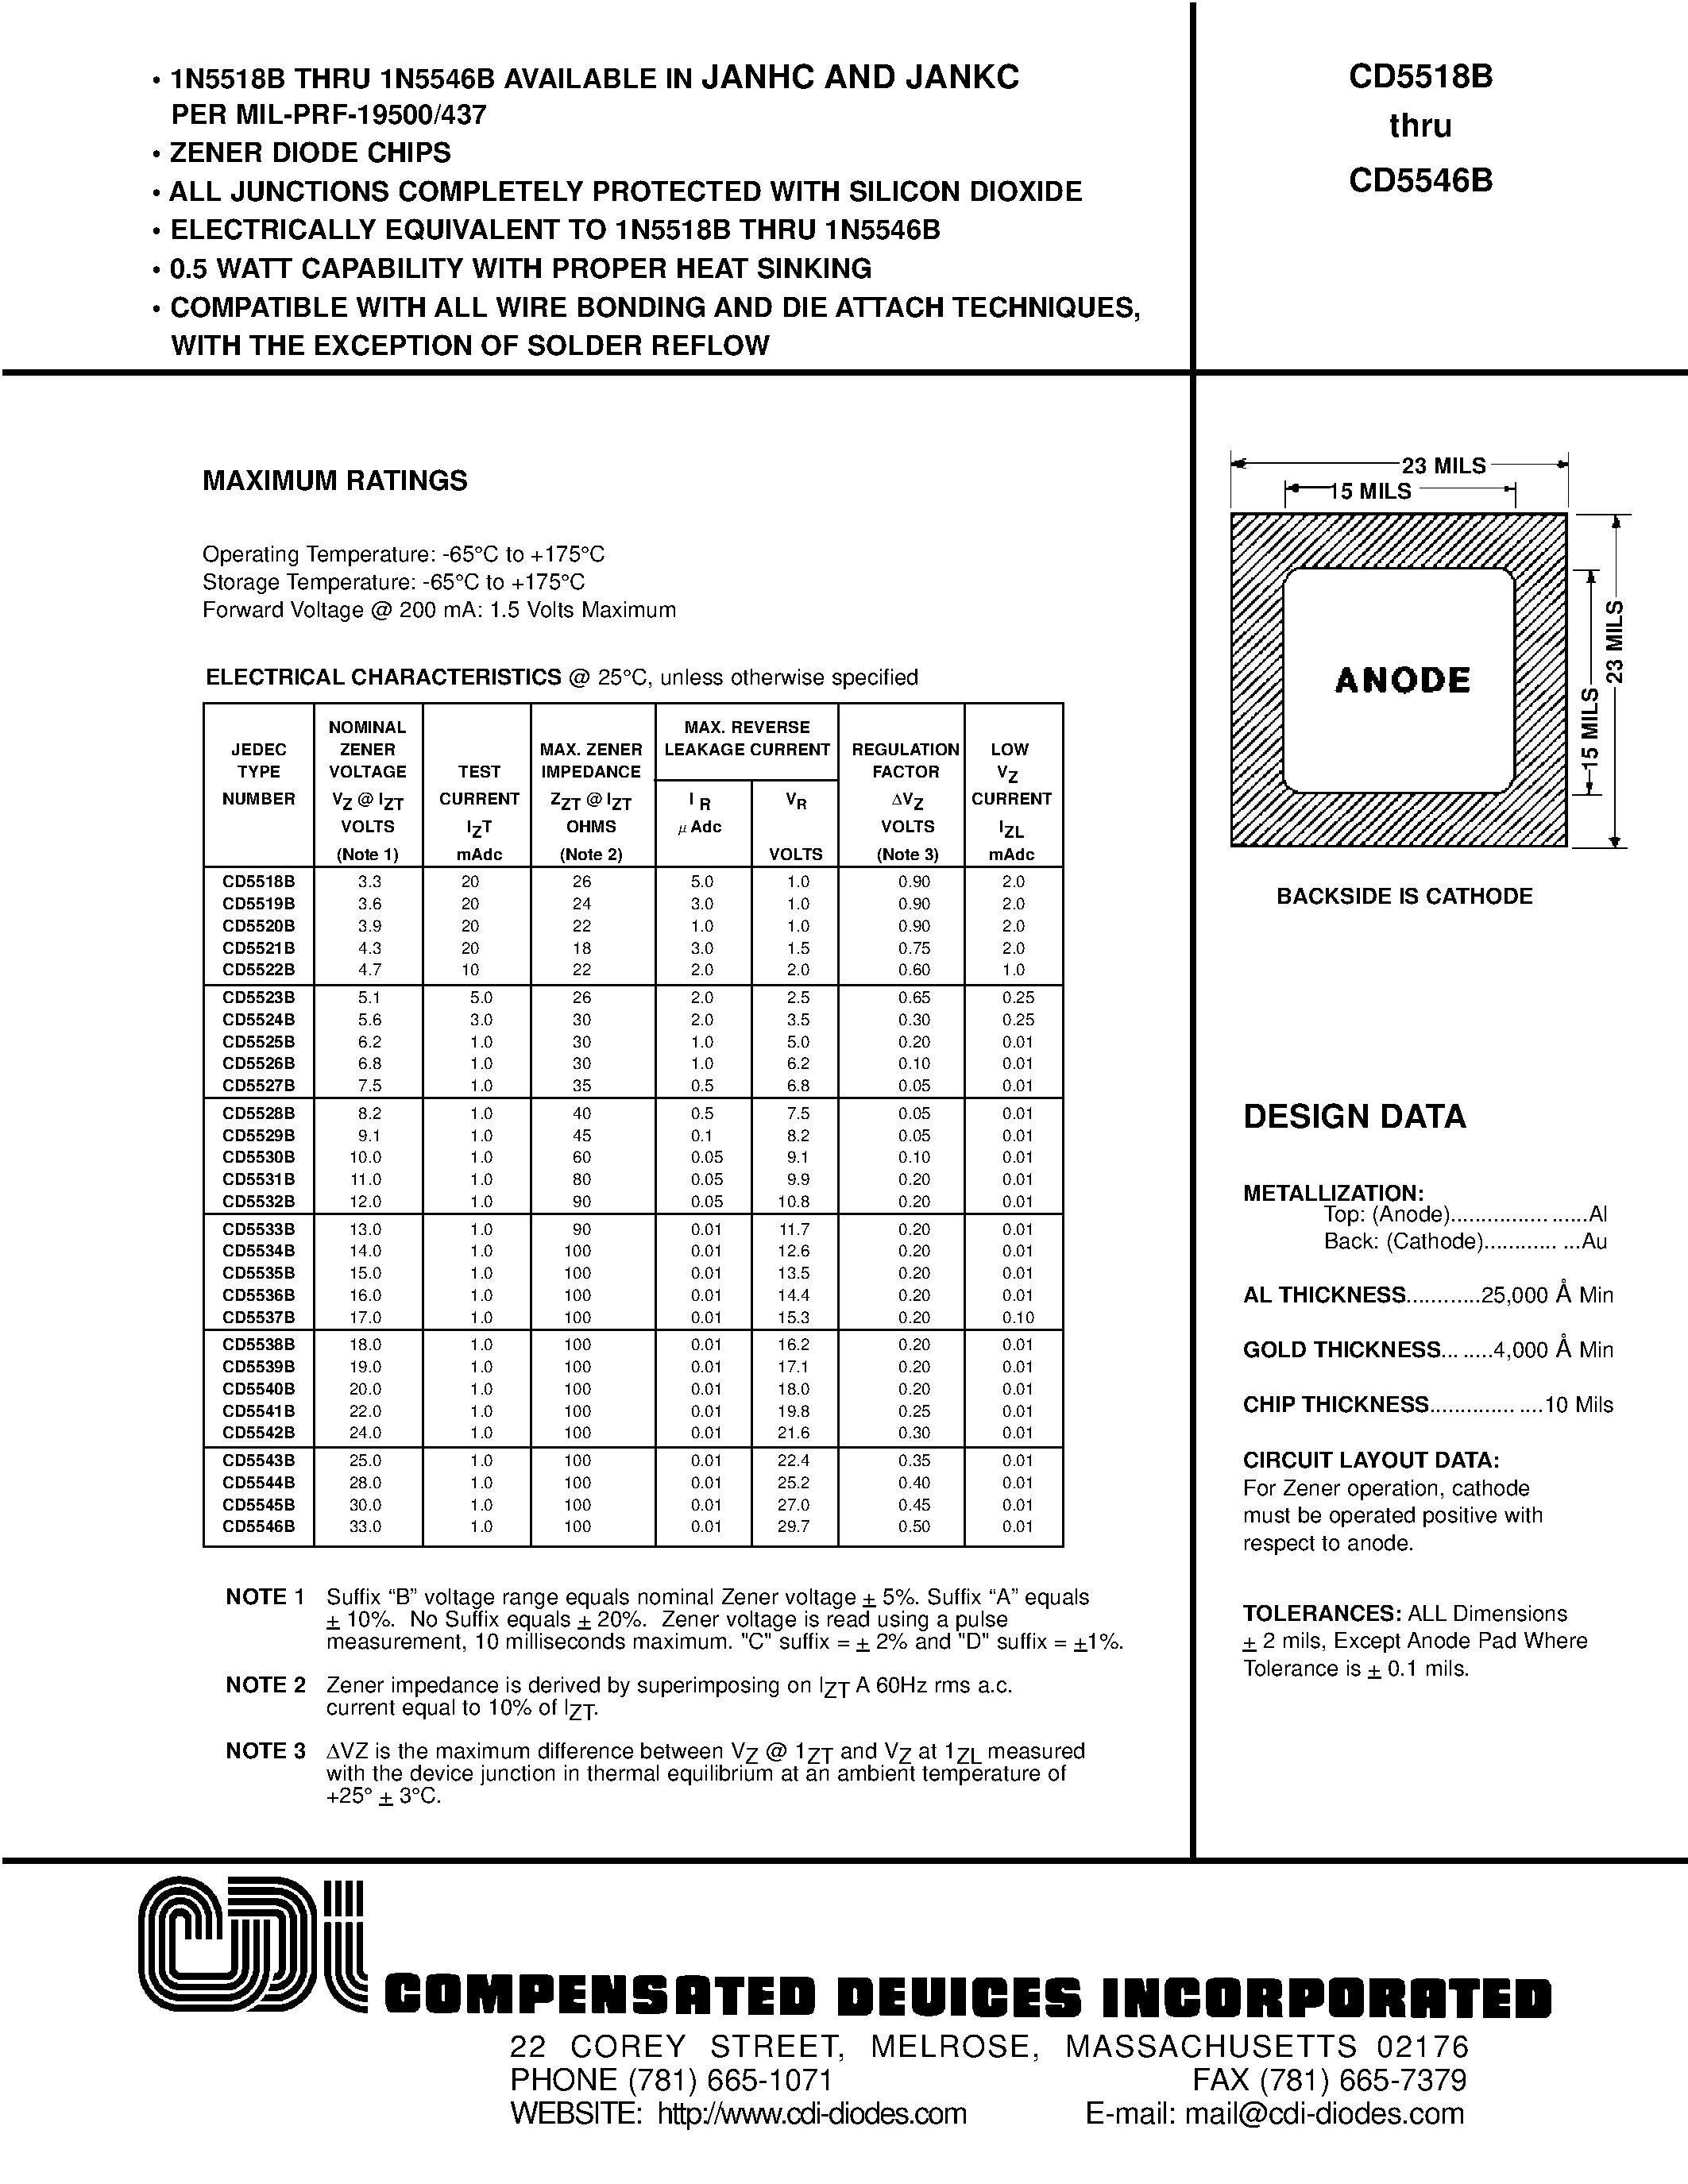 Datasheet CD5536B - ZENER DIODE CHIPS page 1